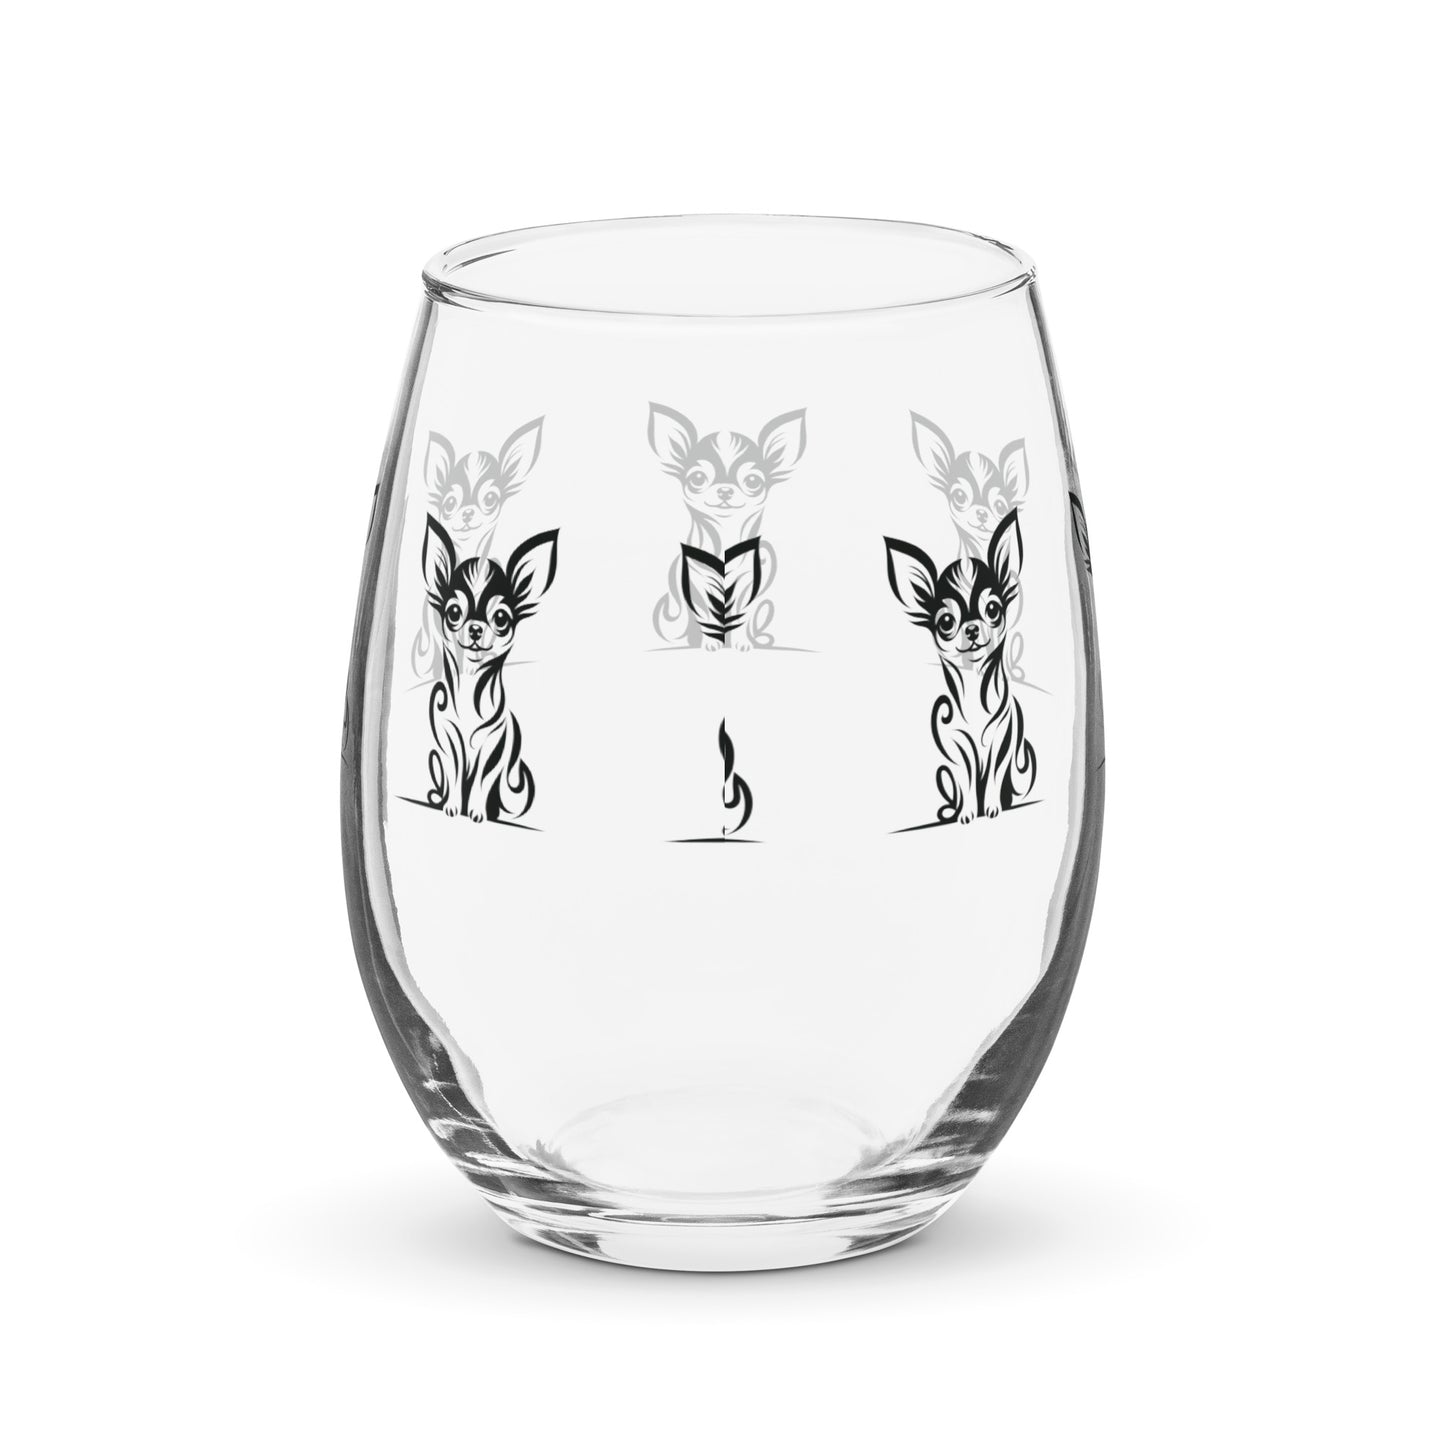 chihuahua chihuahua wine glass dog wine glass personalized wine glass wine glass